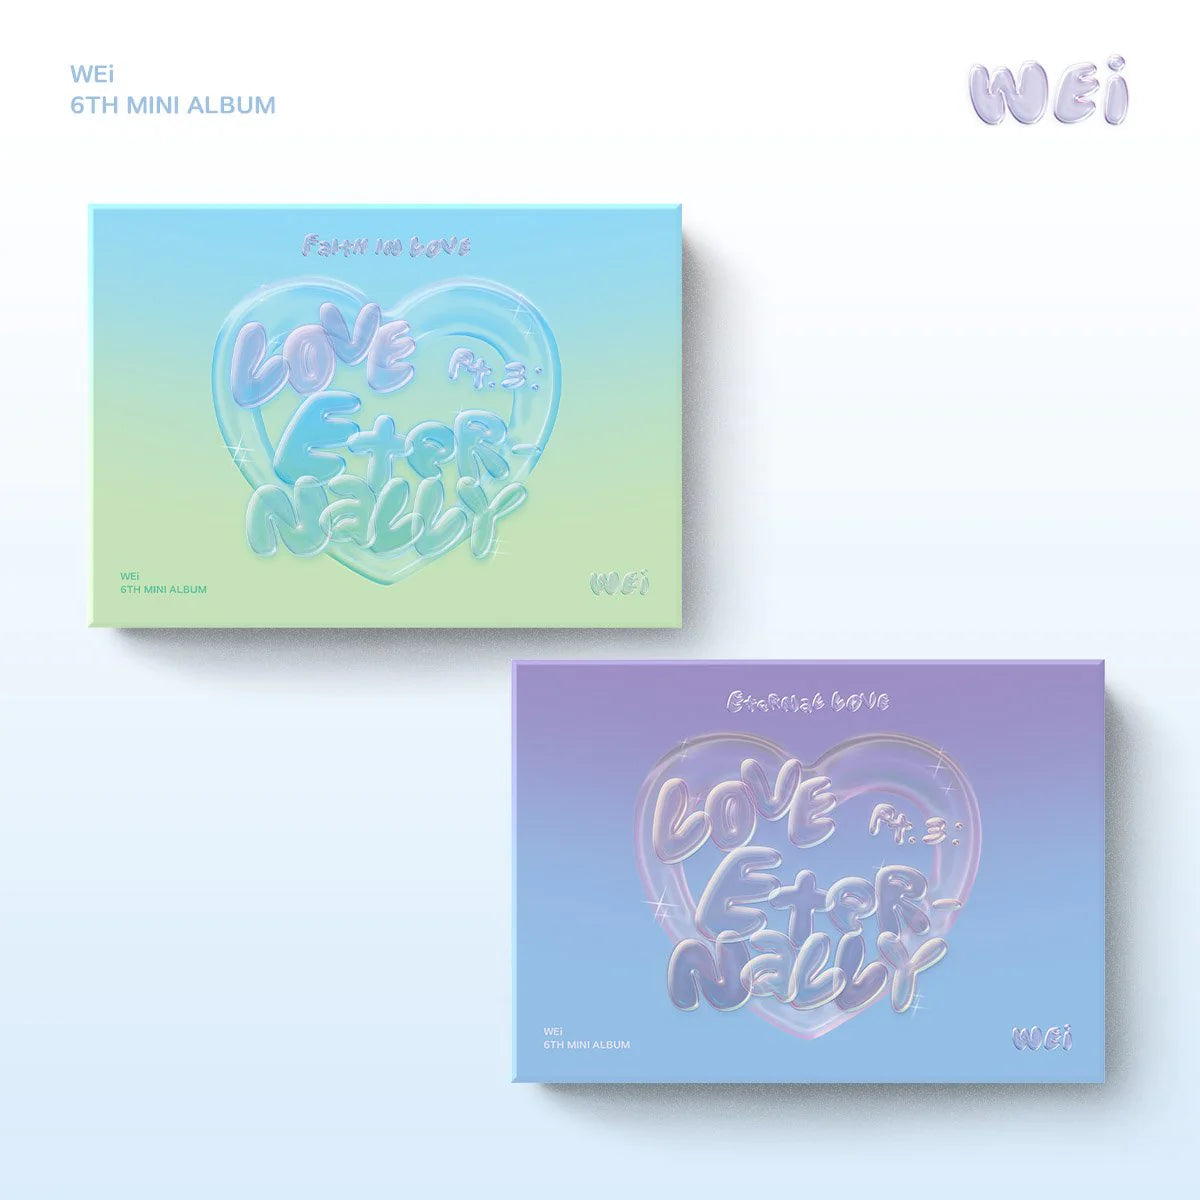 WEi - Love Pt.3: Eternally 'Faith in Love' (Poca Album)